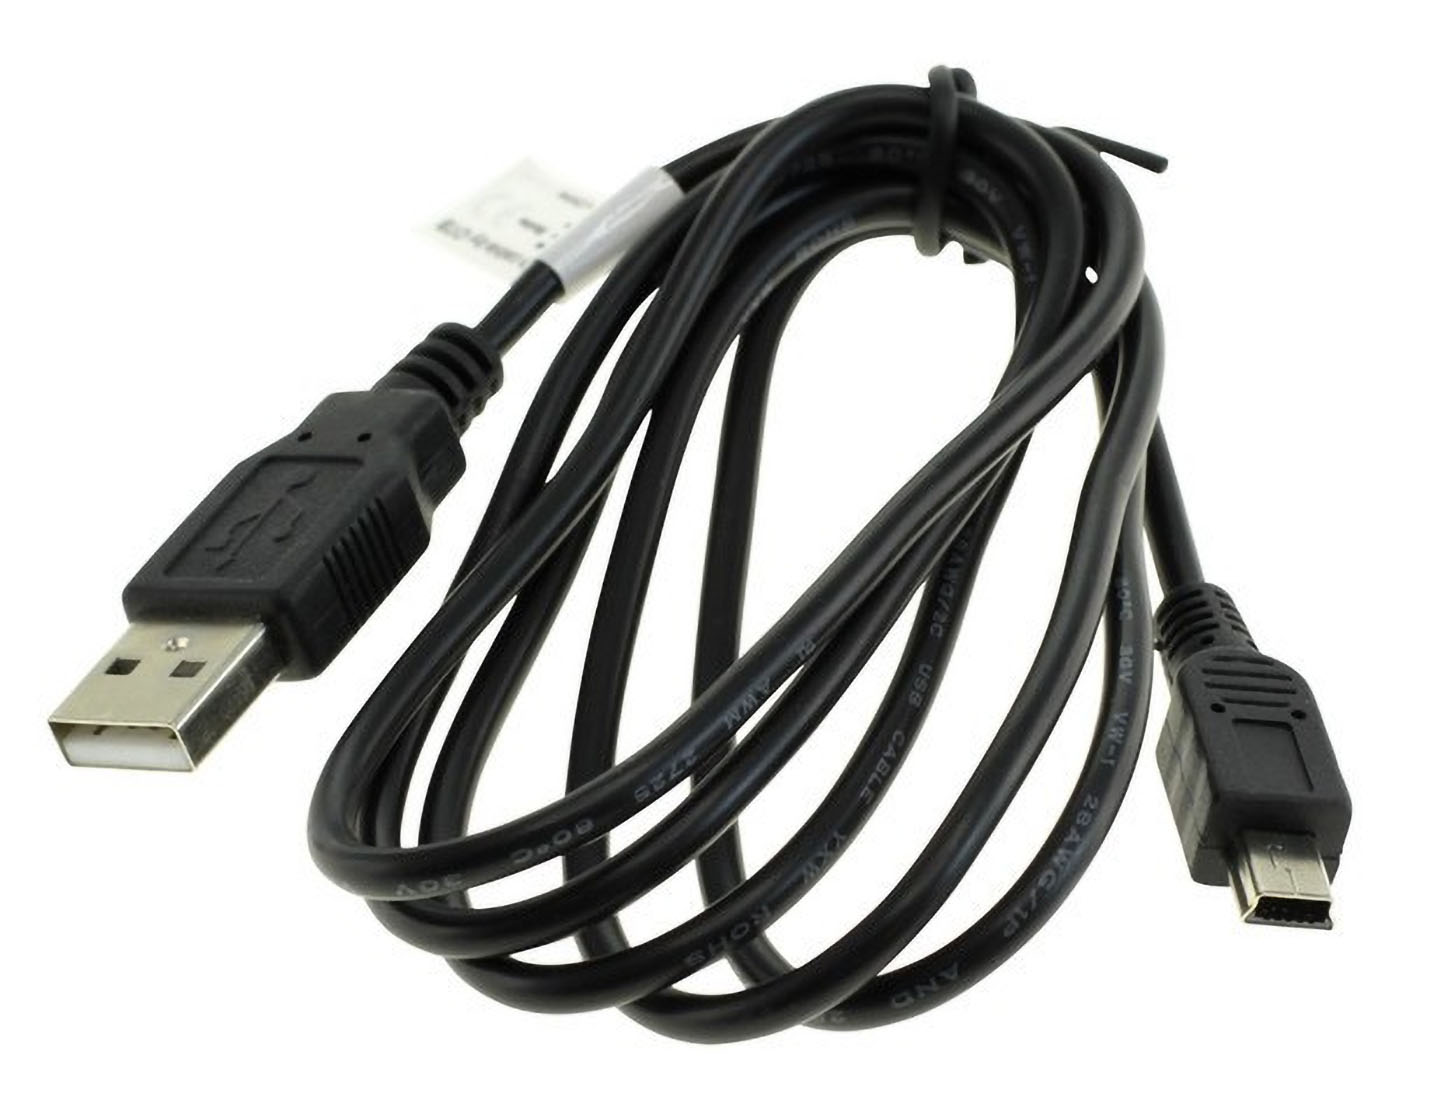 2699 Garmin, nüvi sonstige USB-Datenkabel schwarz Garmin kompatibel Kabel mit MOBILOTEC